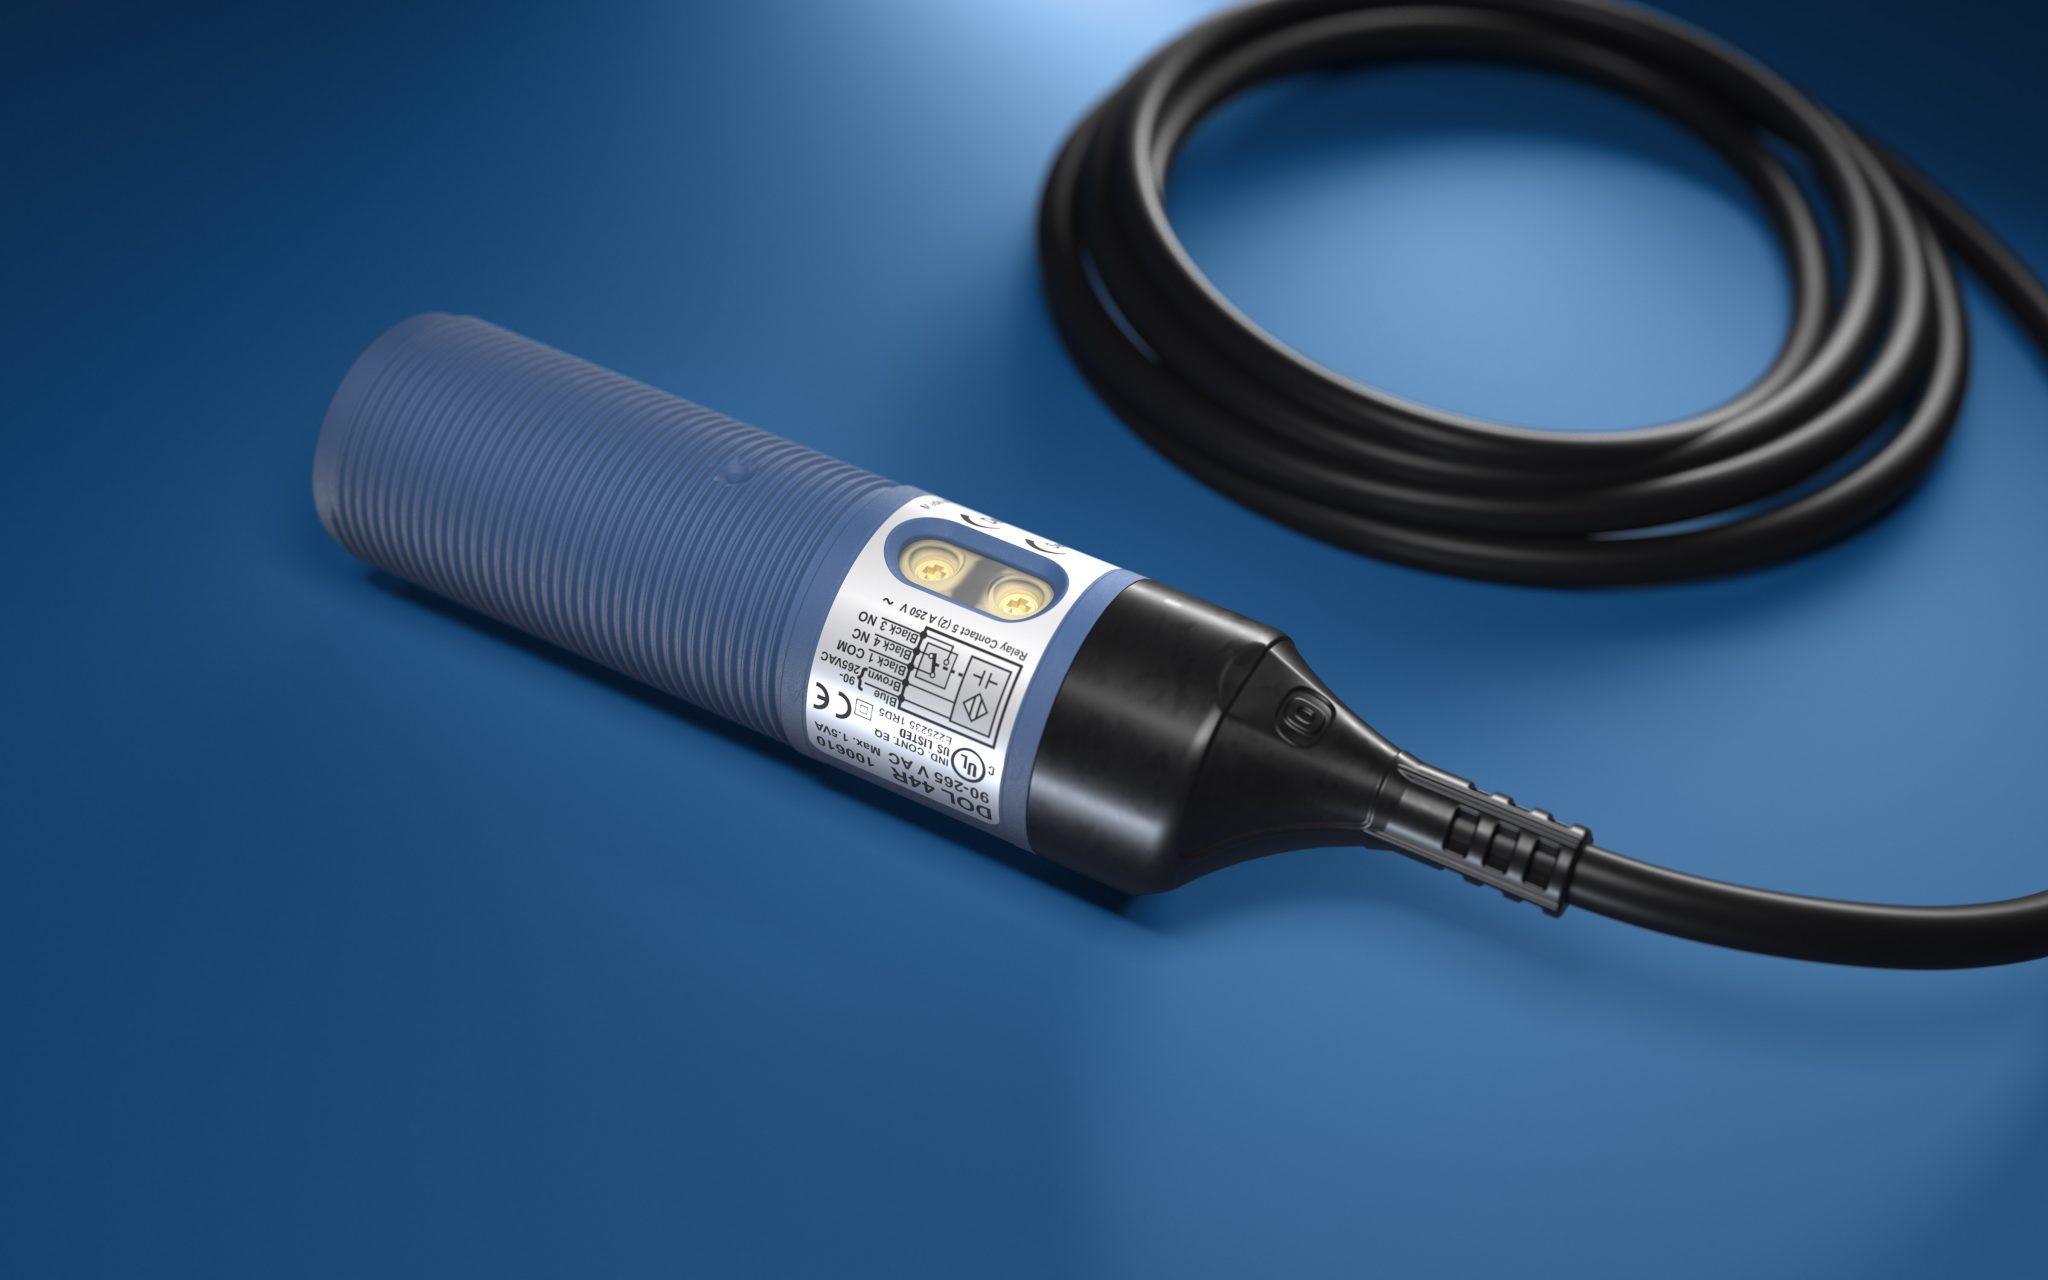 DOL 44R 系列传感器为电容继电器传感器，用于对饲料、谷物和固体食物的检测。